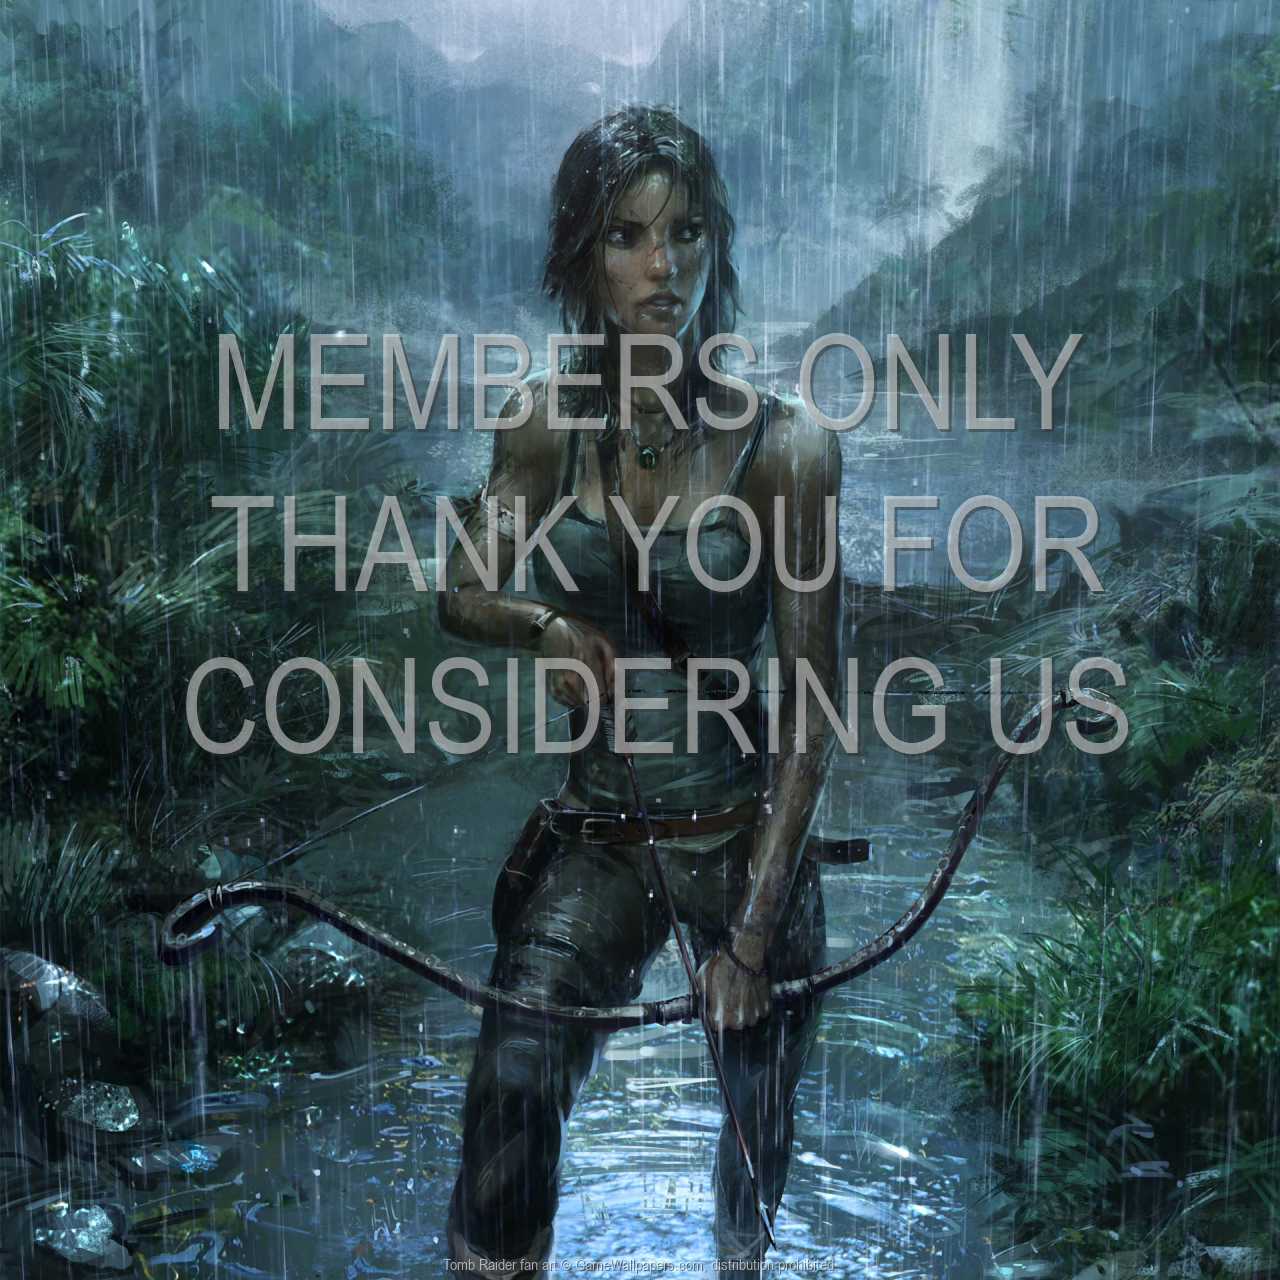 Tomb Raider fan art 720p%20Horizontal Mobile wallpaper or background 01